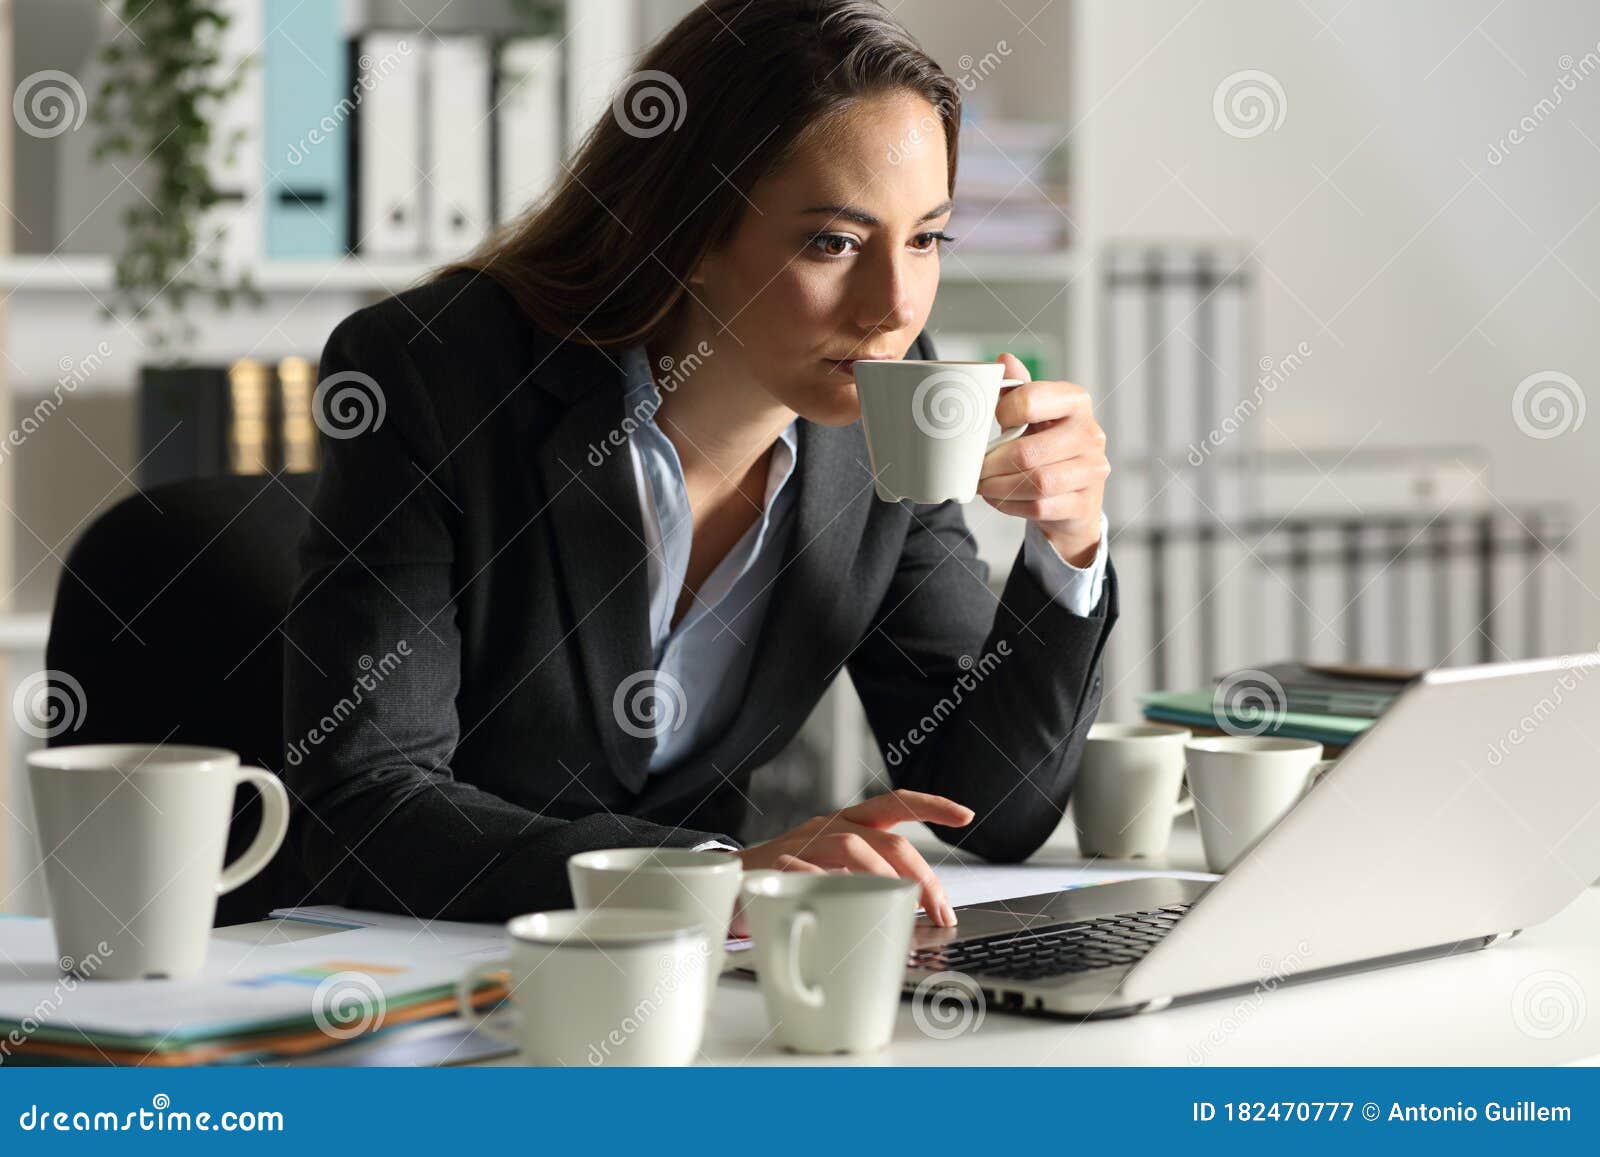 executive overworking needing caffeine at night at office